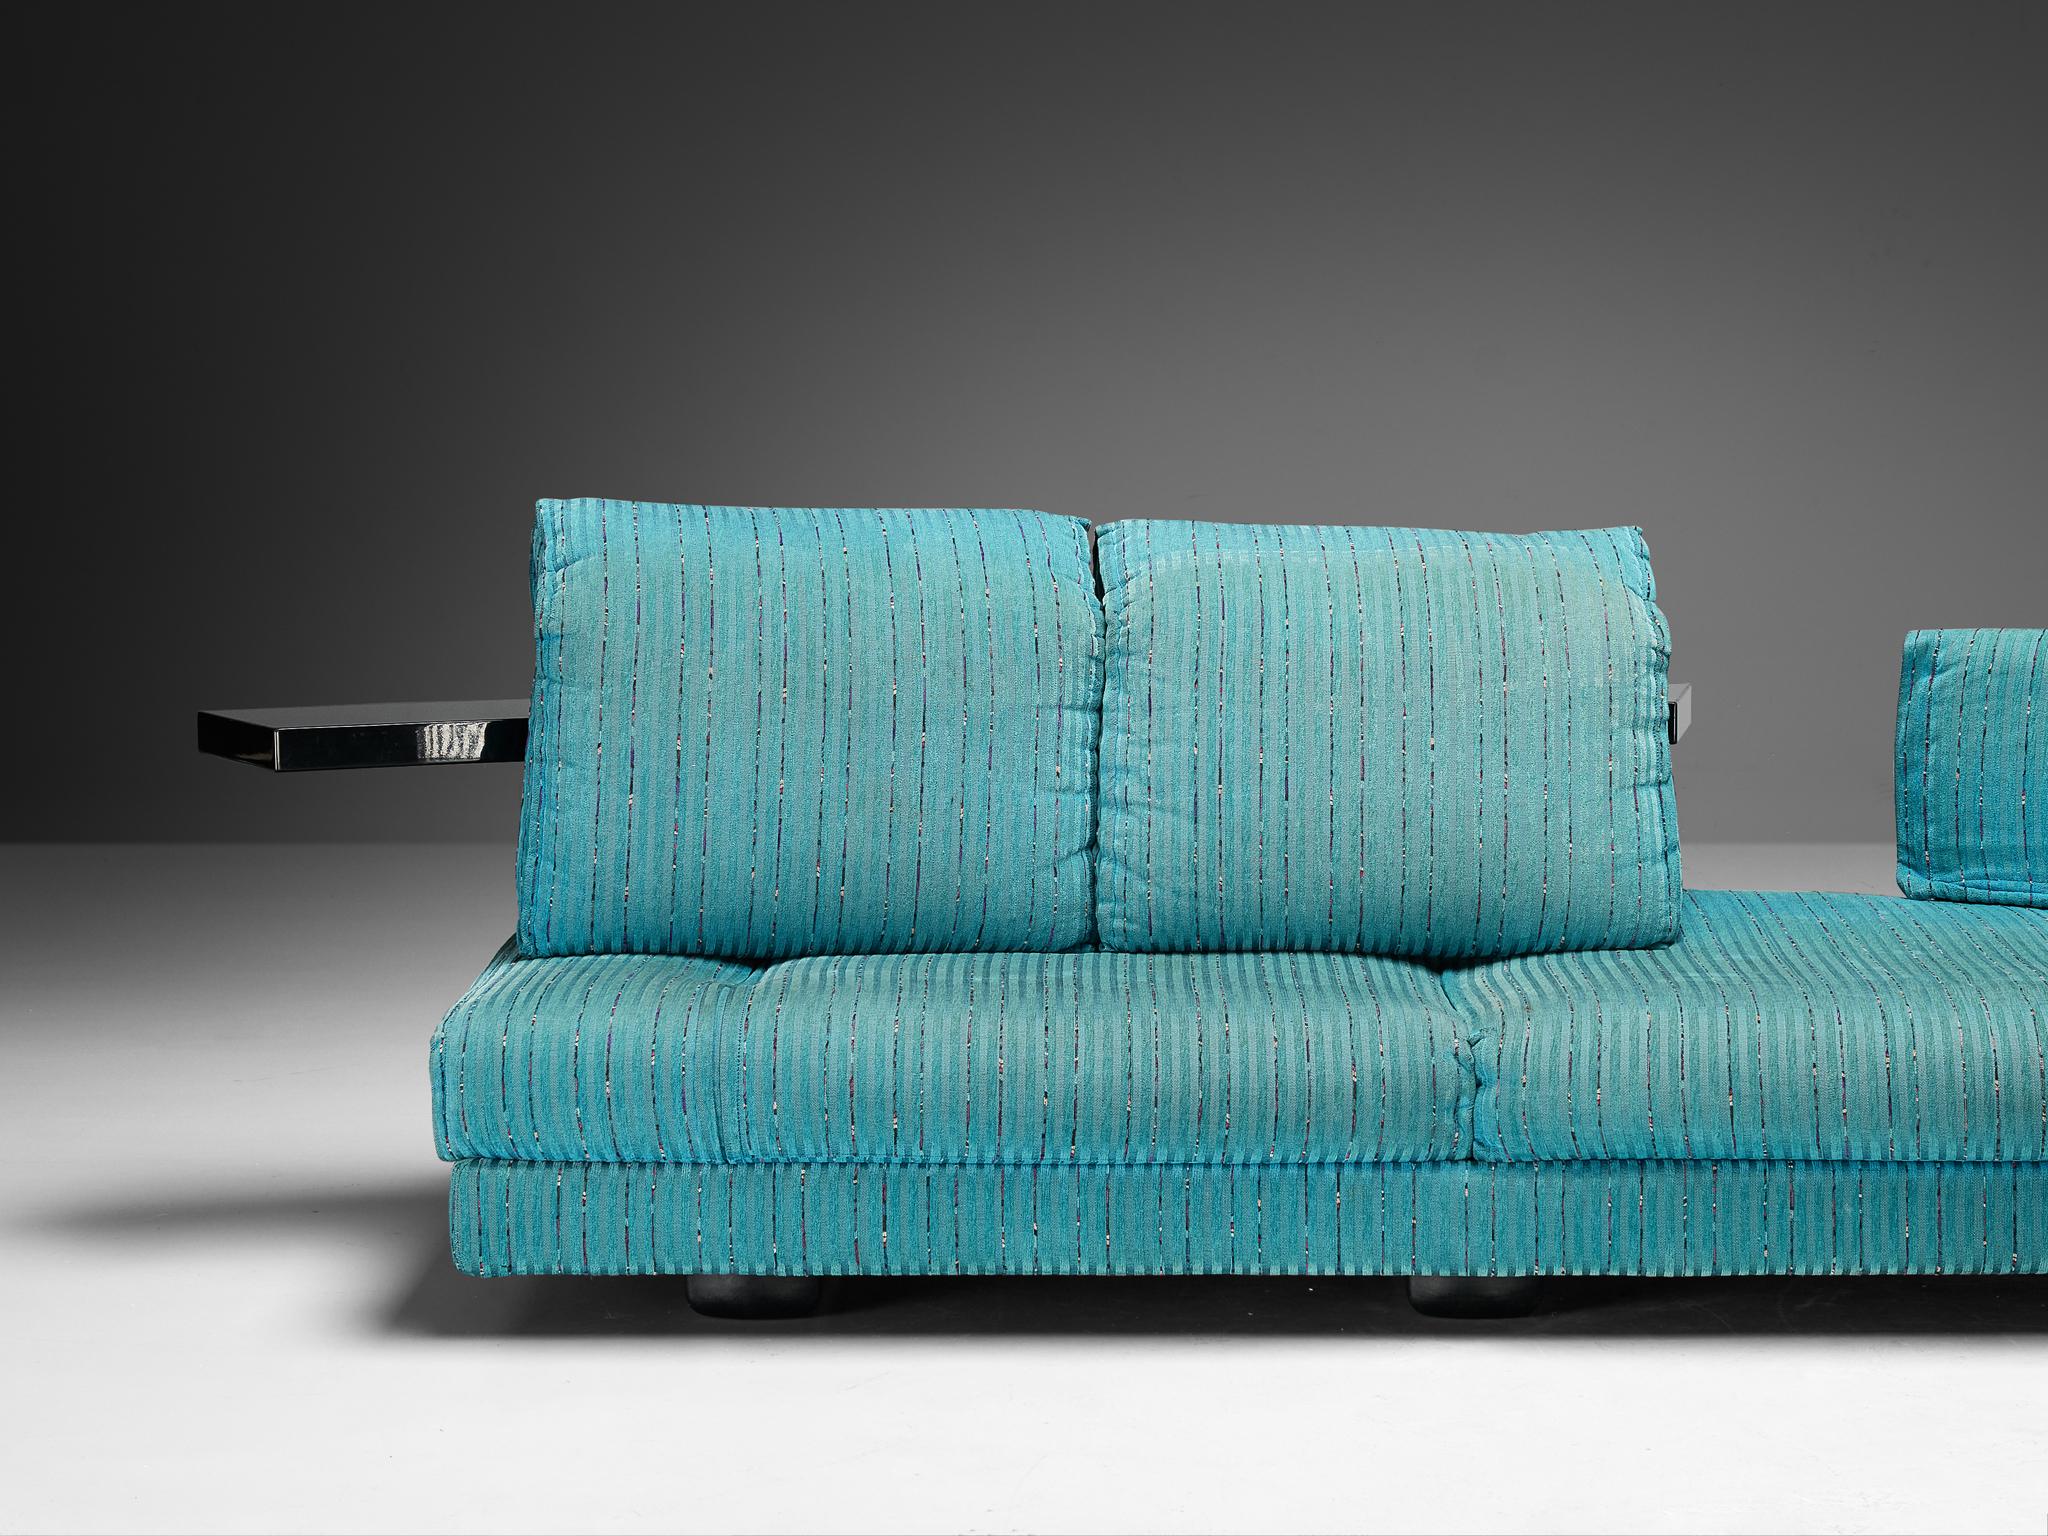 Metal Mauro Lipparini for Saporiti 'Avedon' Sofa in Turquoise Upholstery For Sale